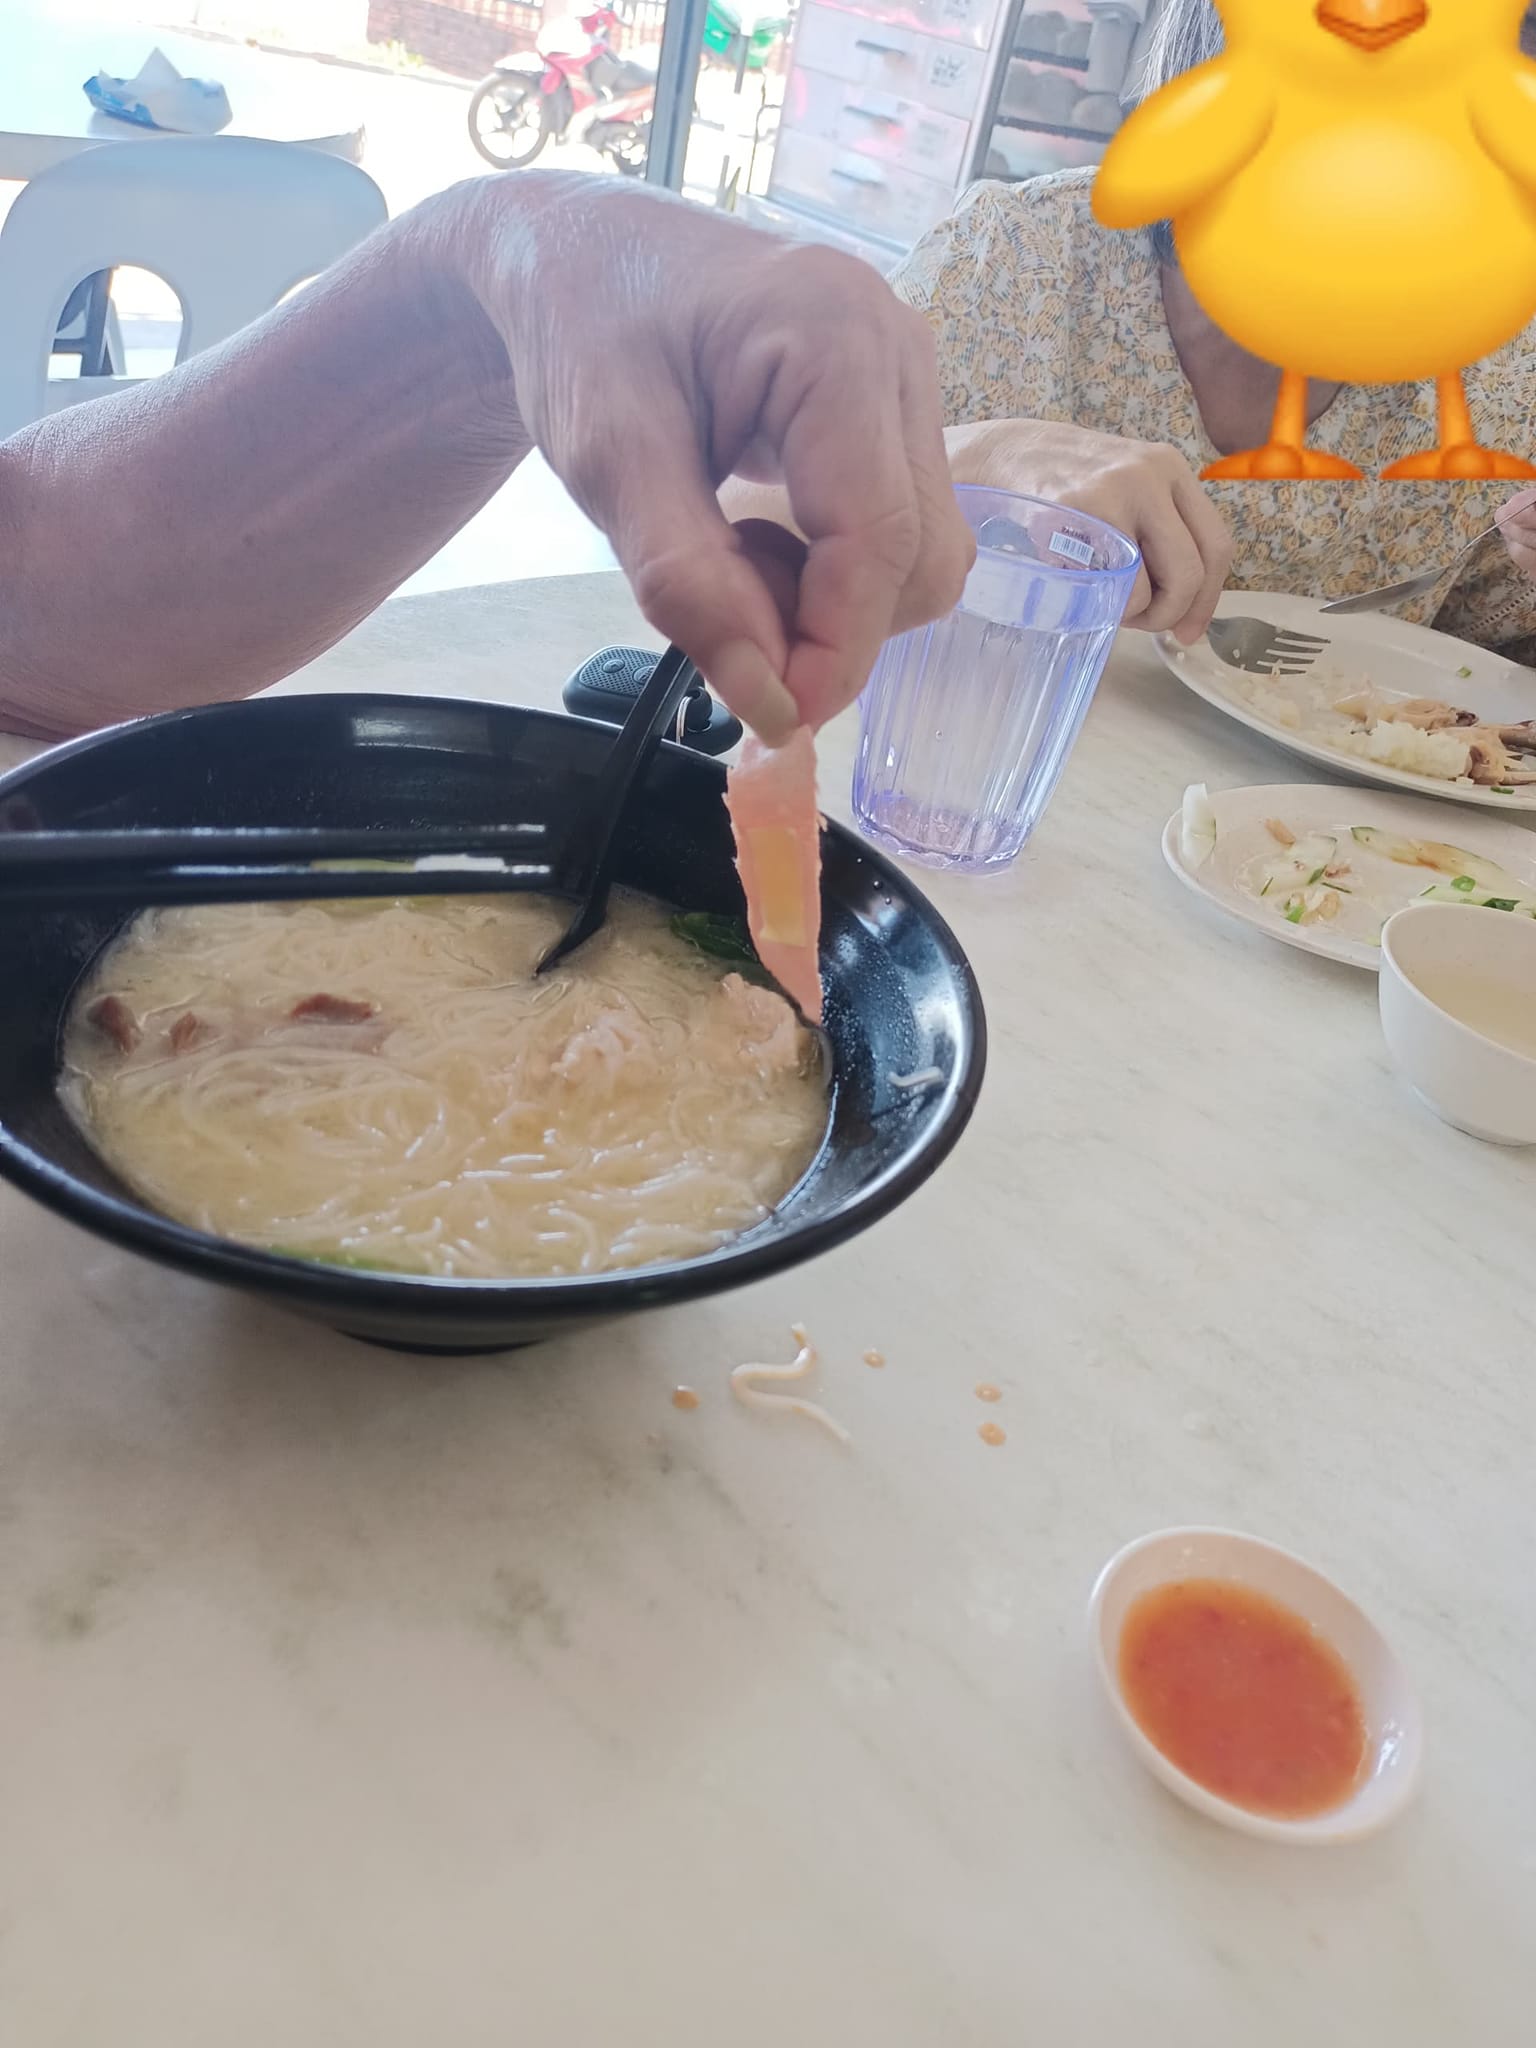 Man showing plaster found inside noodle soup